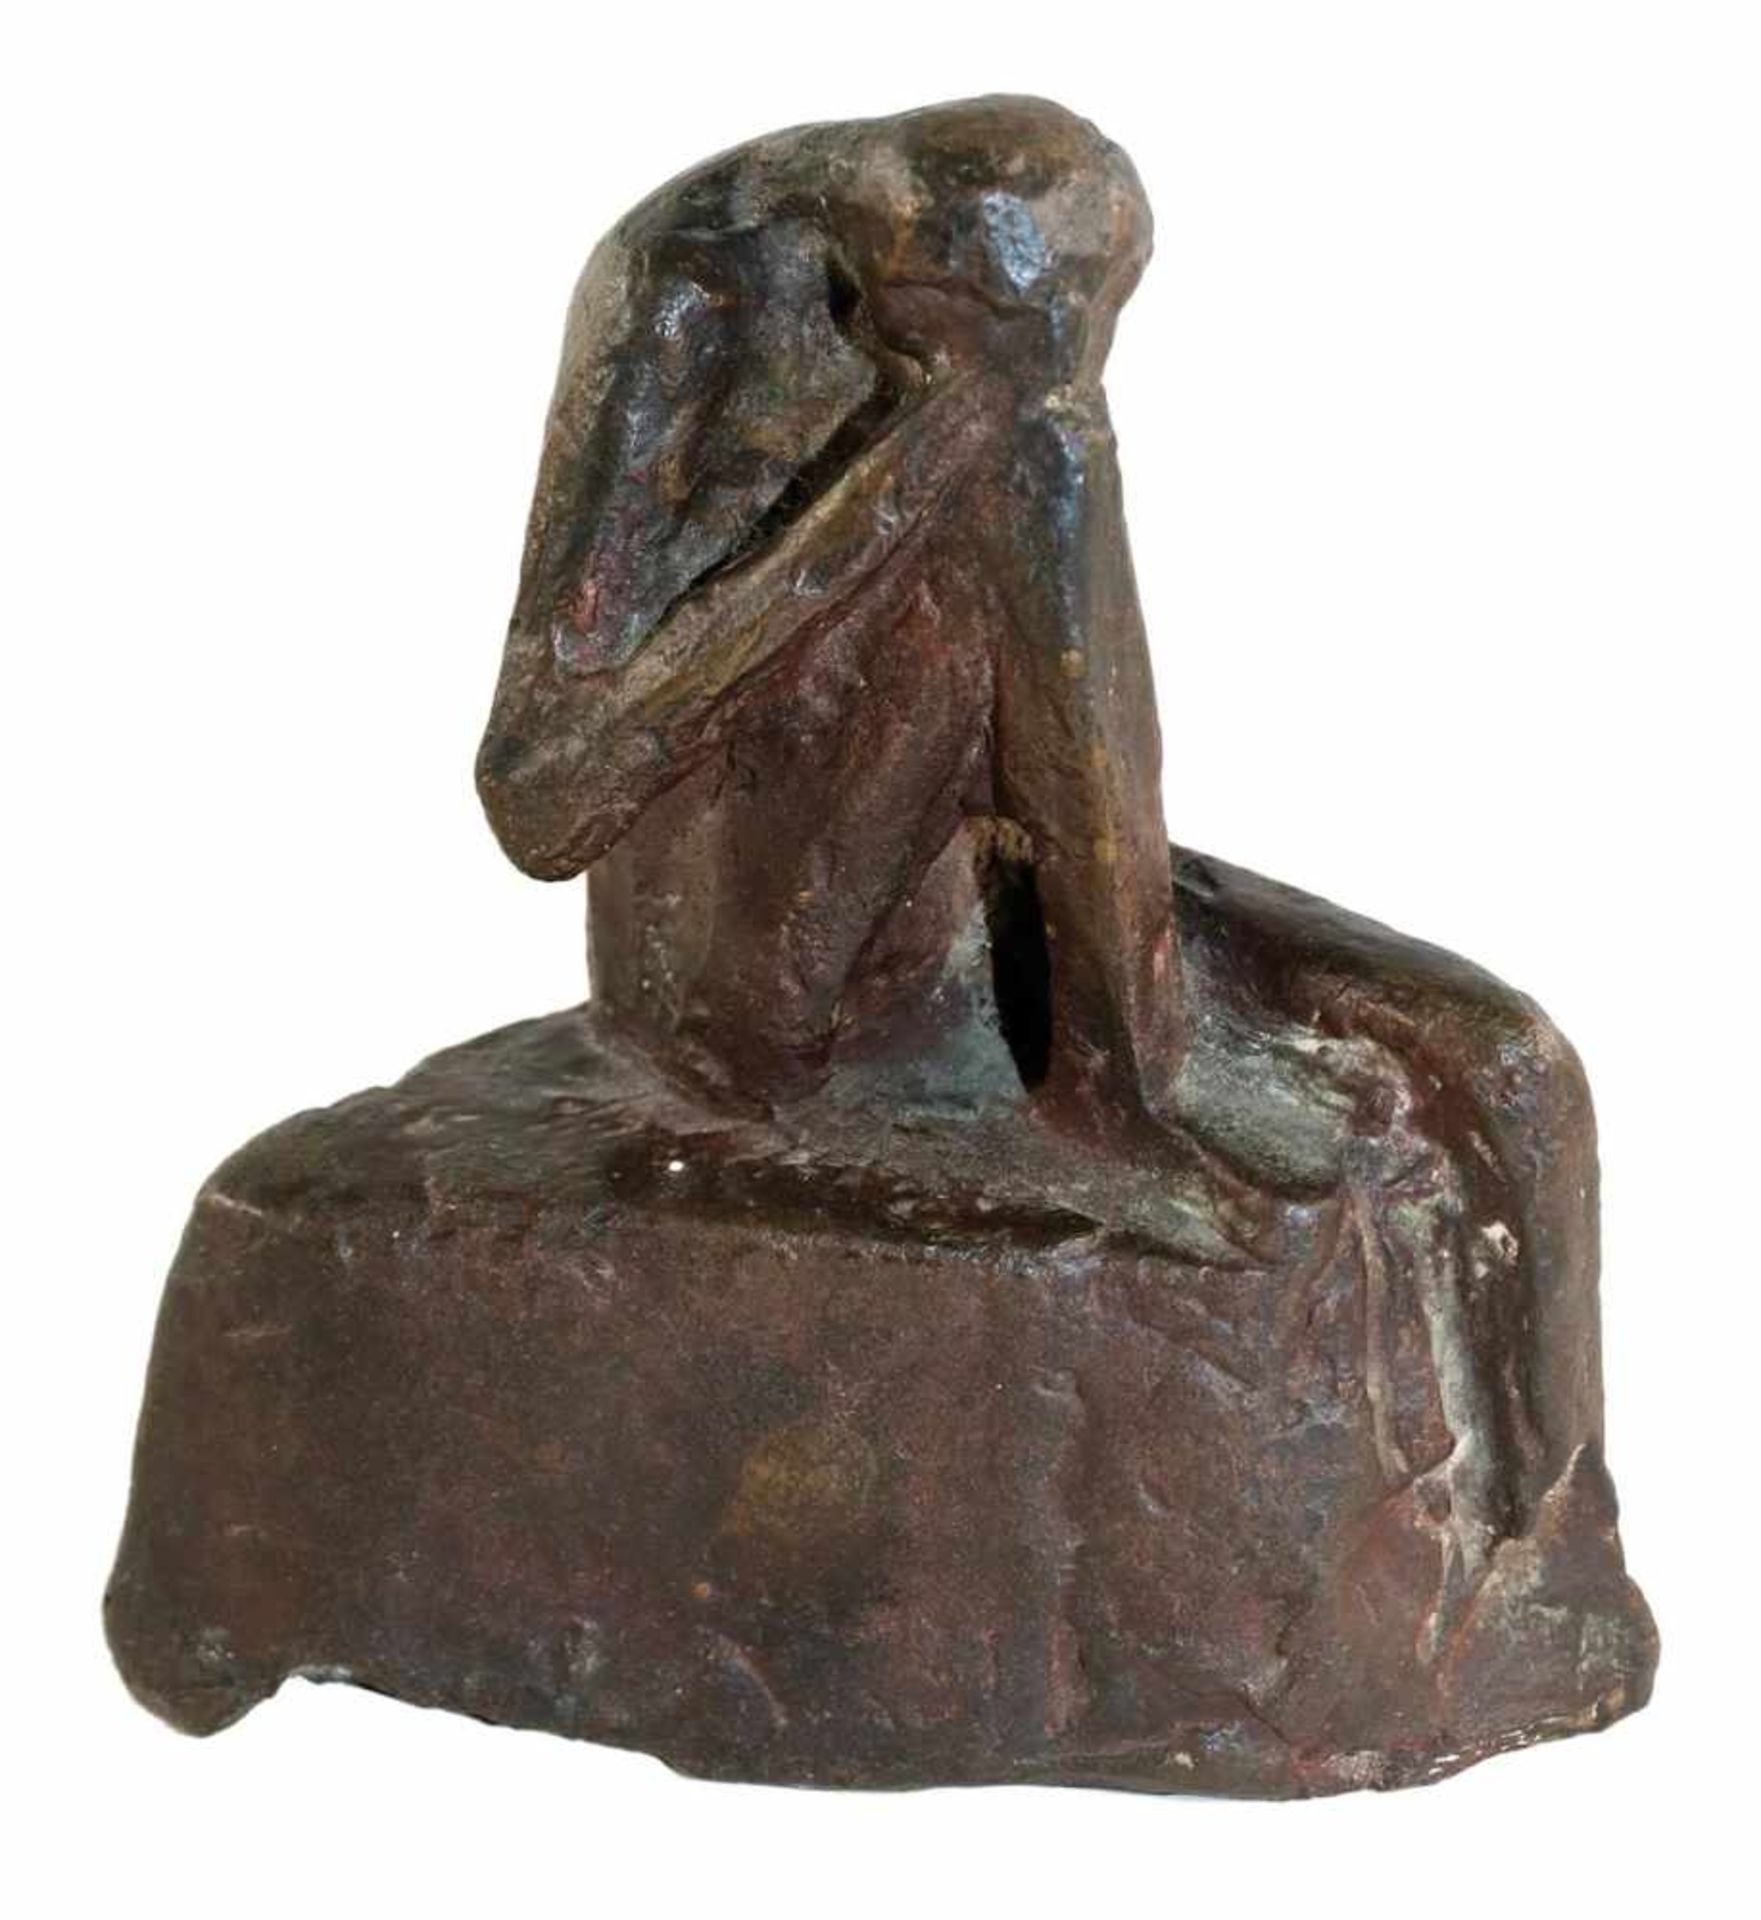 Sassen, Beatrix(1945 Vinsebeck). Kauernder. Bronze. Monogr. B.S. Datiert 64/87. 11,6 cm. Guß bei